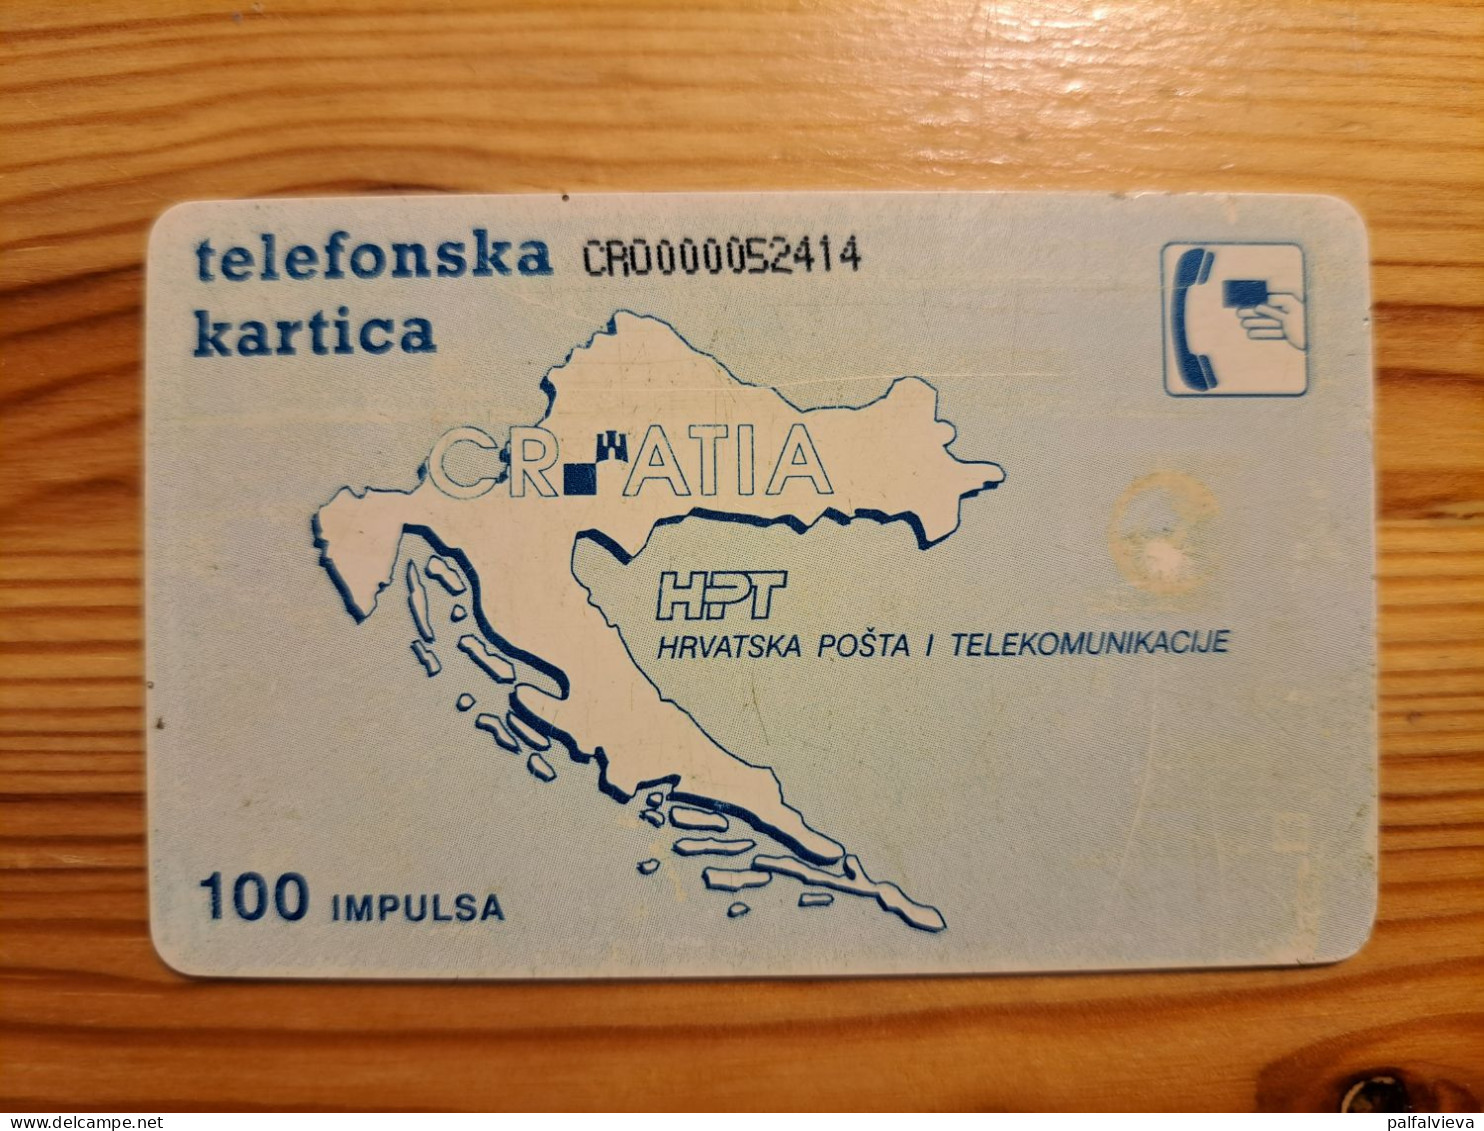 Phonecard Croatia - Painting, Transmadrid S.A. - Kroatien